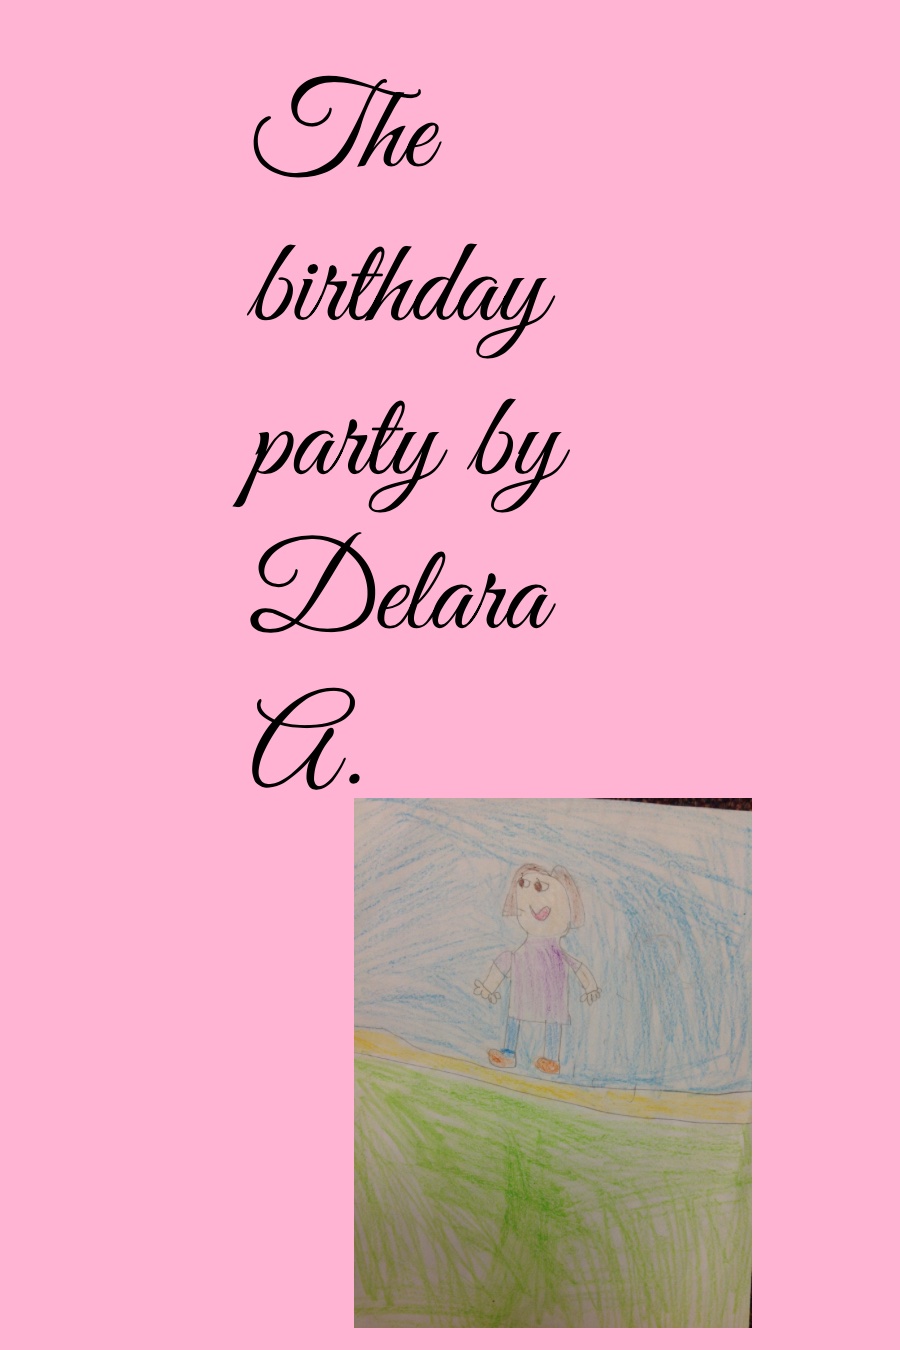 The Birthday Party by Delara A